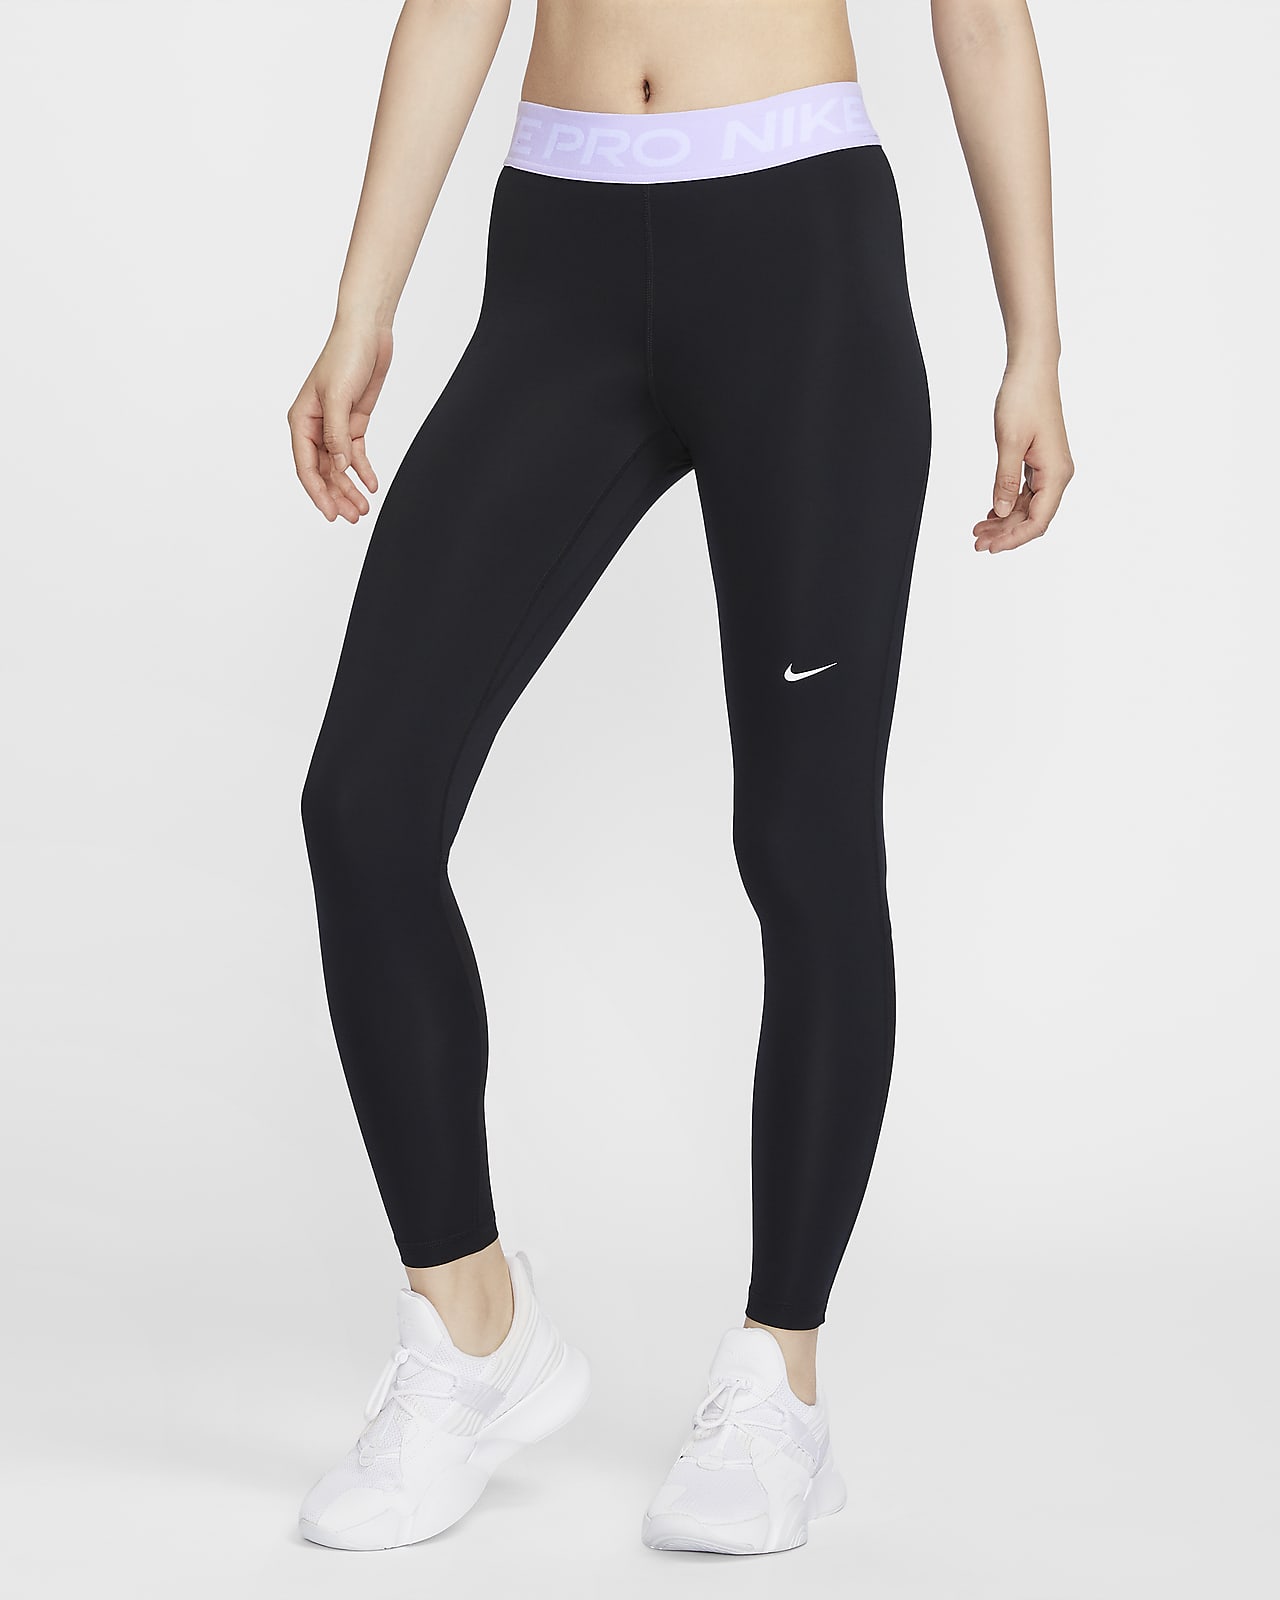 Nike Pro Women's Mid-Rise Leggings